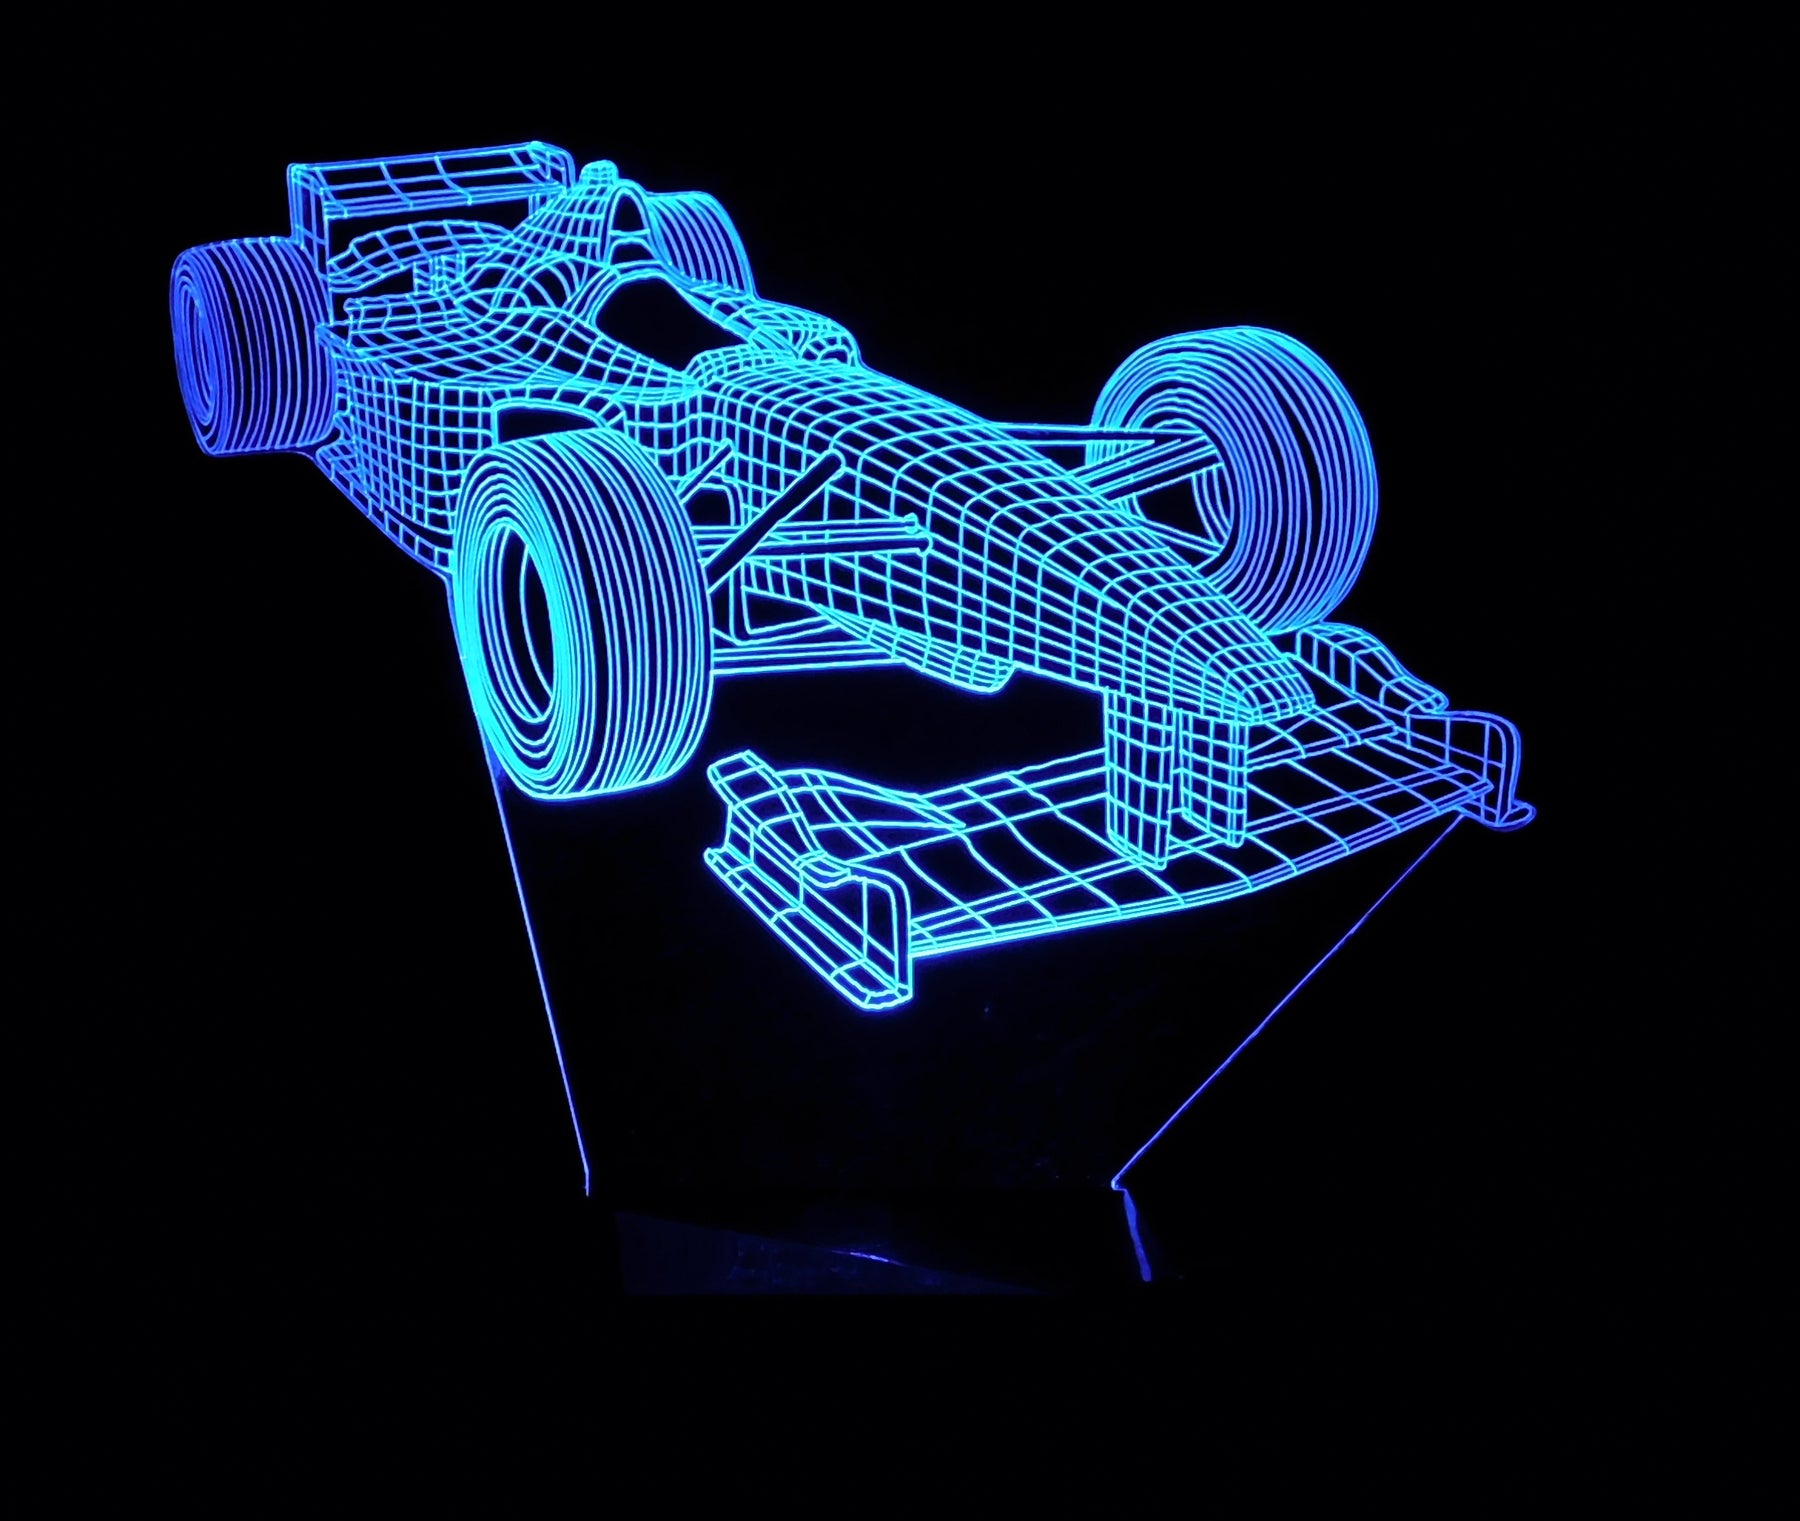 Formula One Race Car 3-D Optical Illusion Multicolored Light